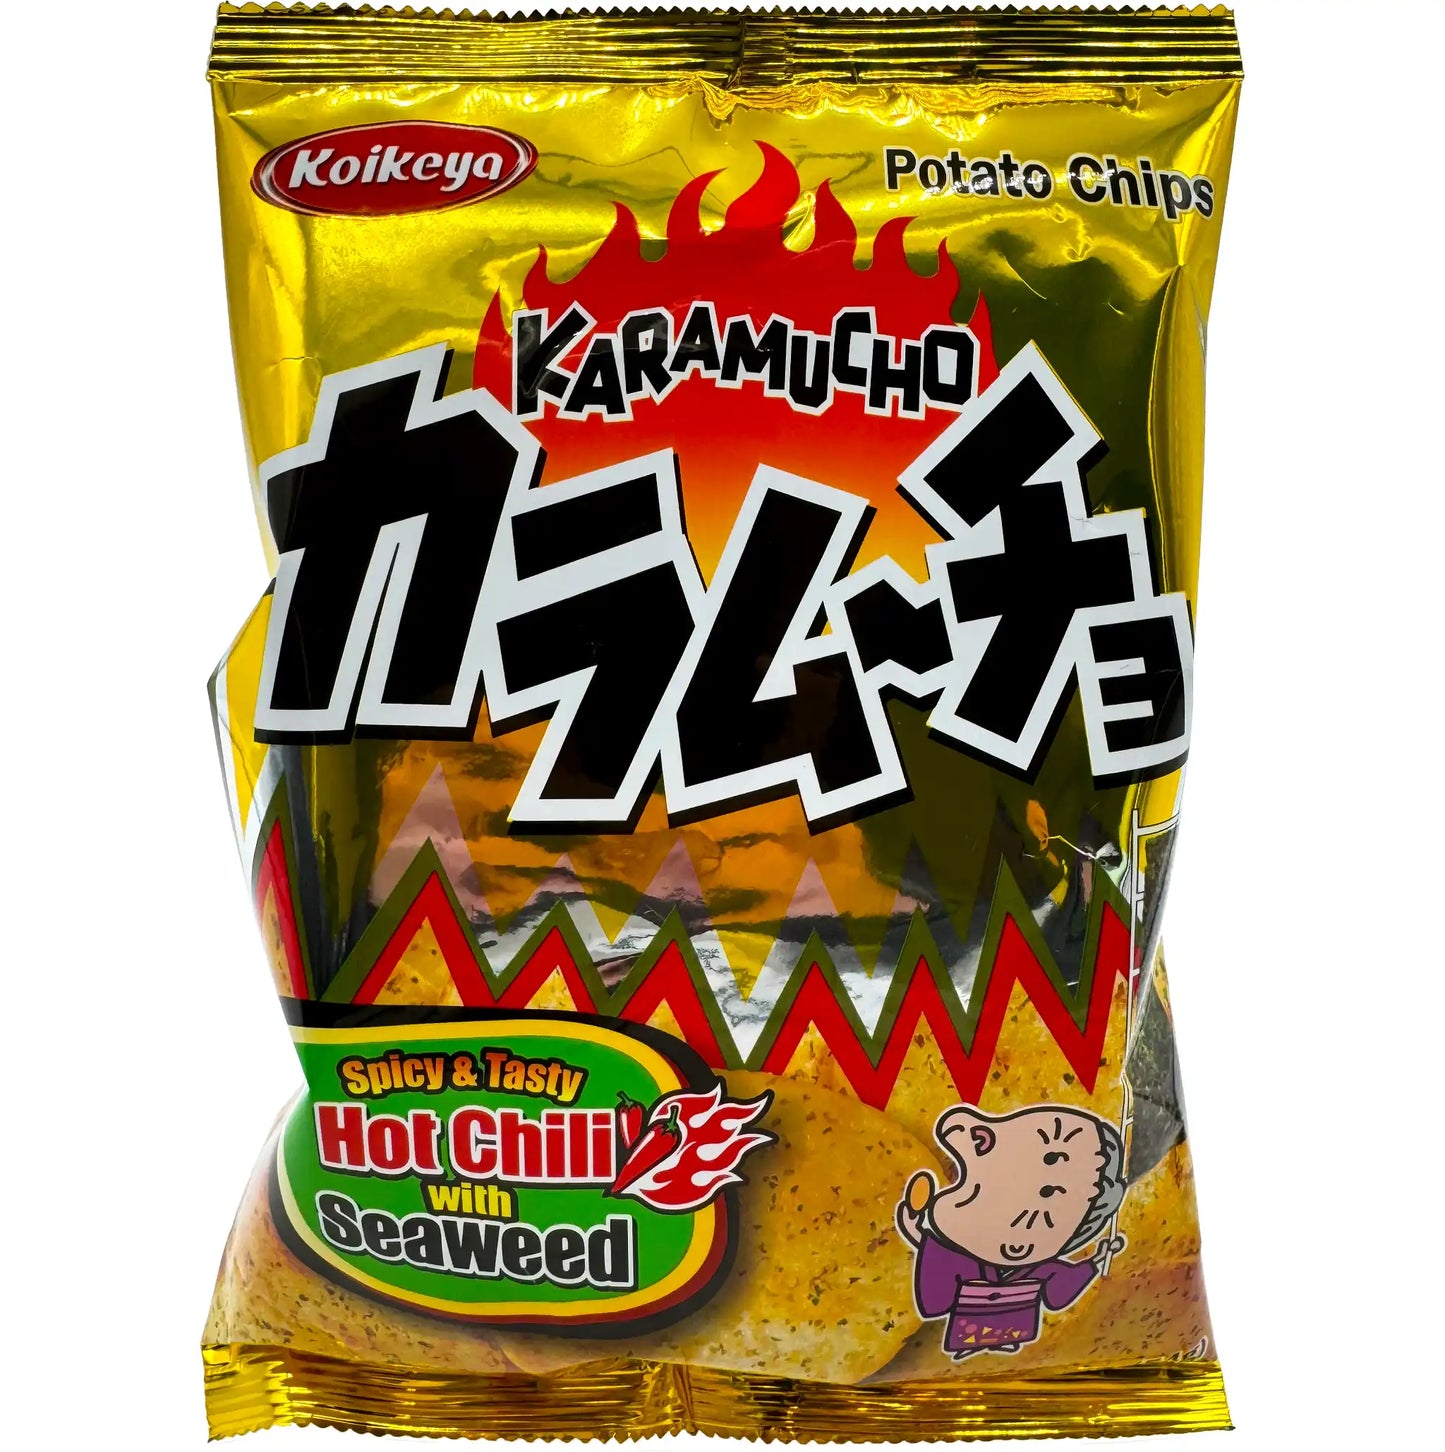 Koikeya Karamucho Potato Hot Chili with Seaweed Chips 1.9 oz